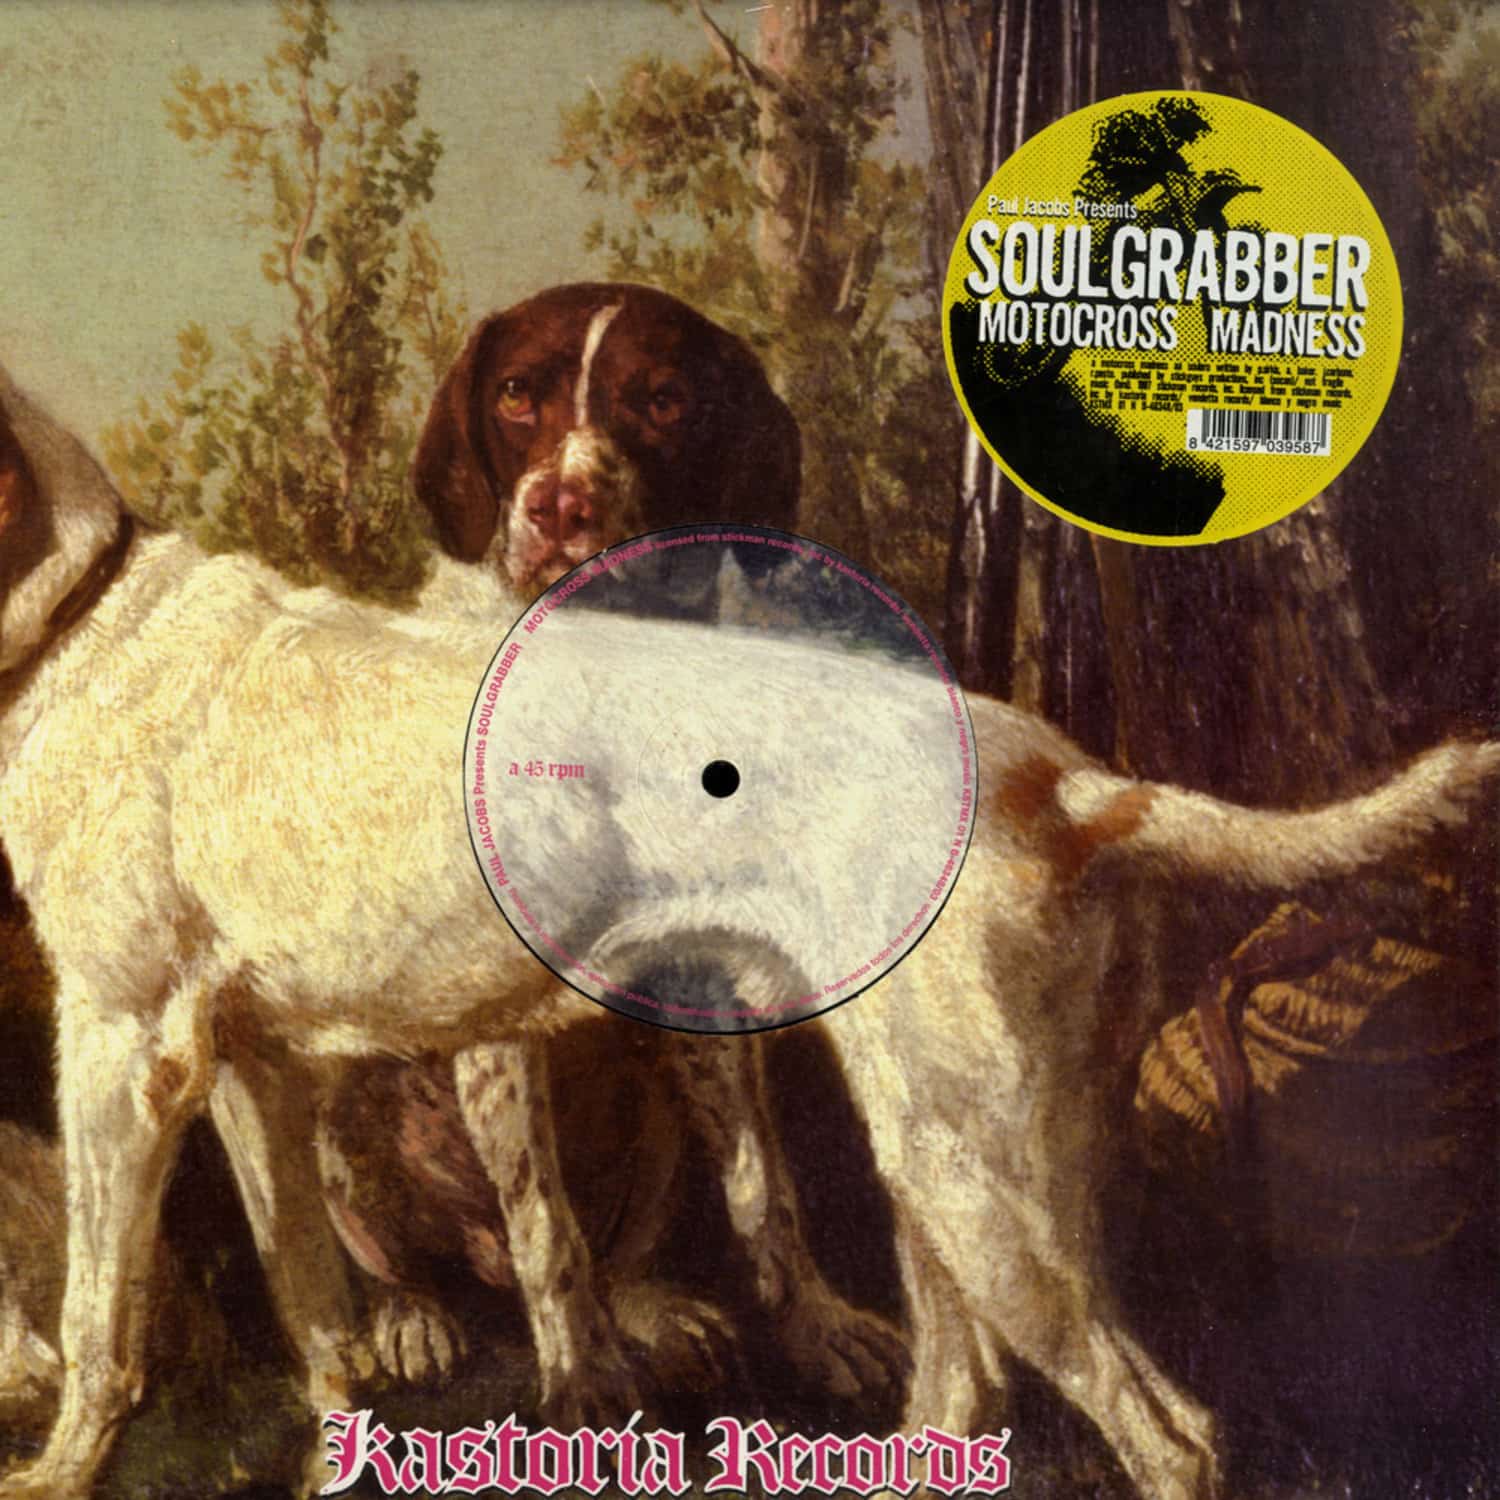 Paul Jacobs Presents Soulgrabber - MOTOCROSS MADNESS / SOULERO